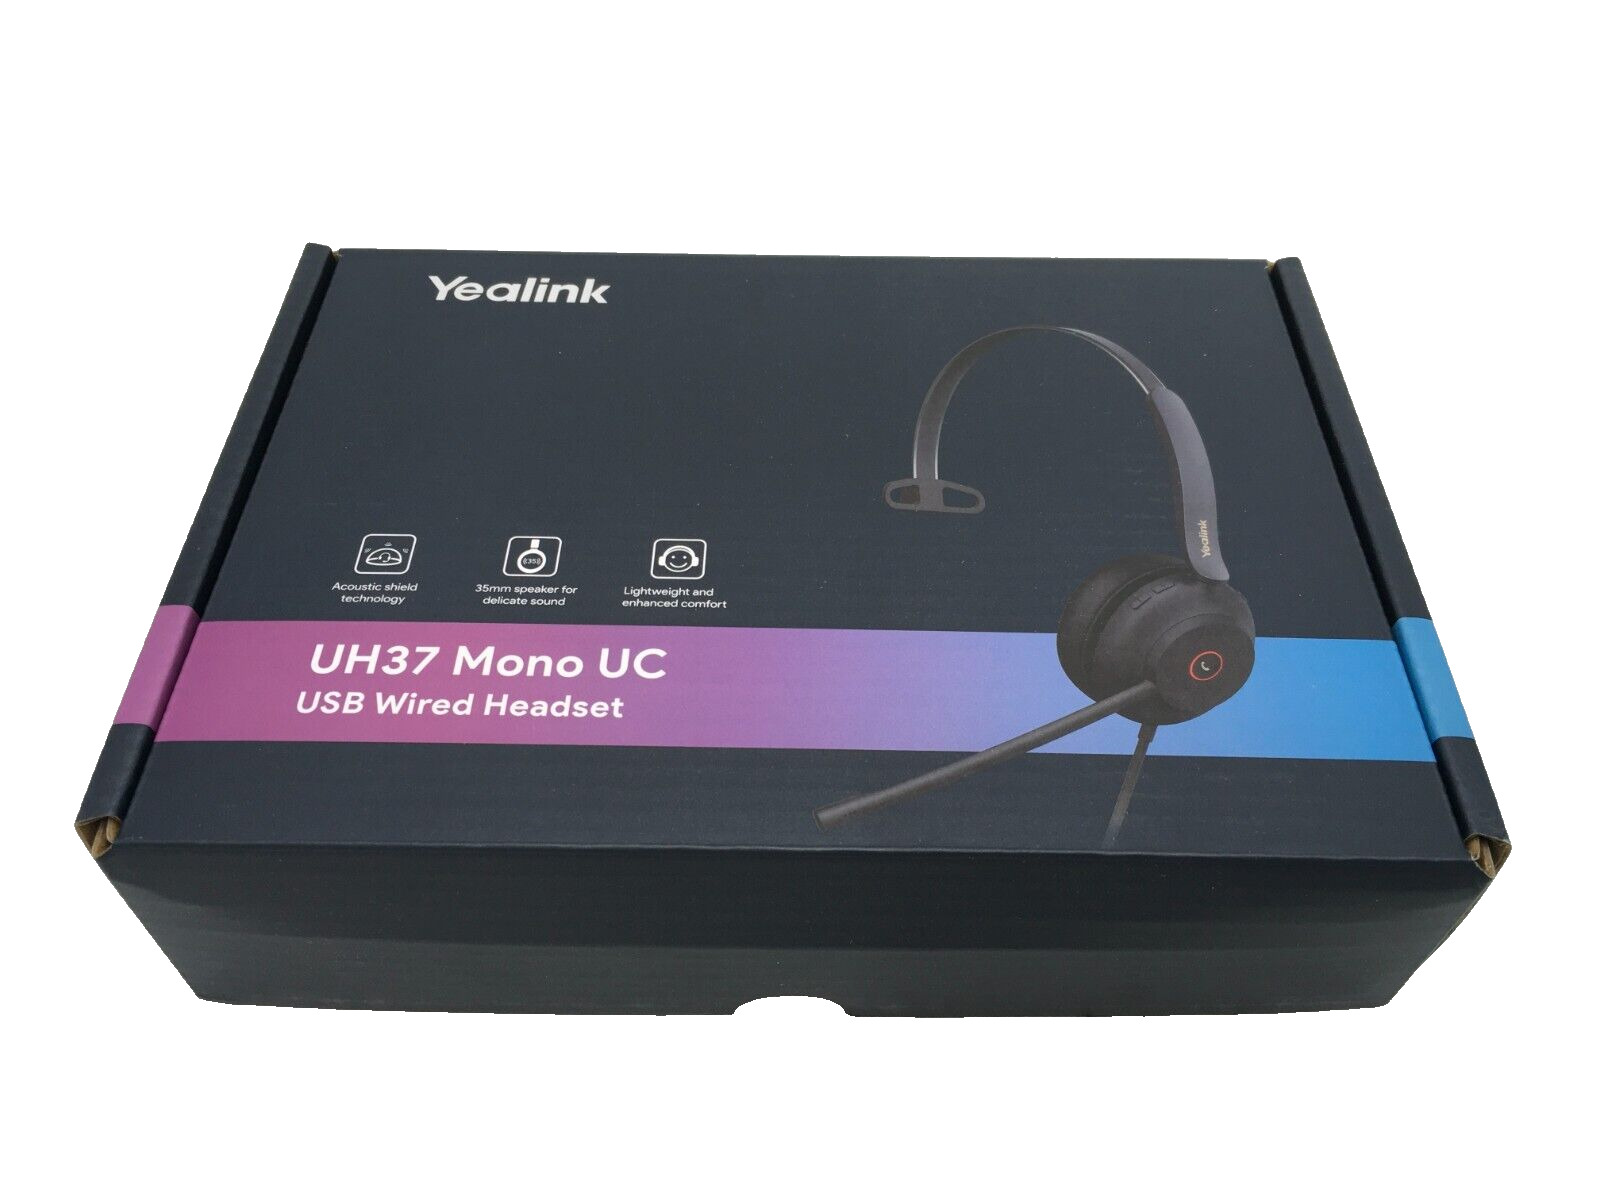 NEW   Yealink UH37-MONO-UC Yealink USB Wired Headset Part Number 1308108